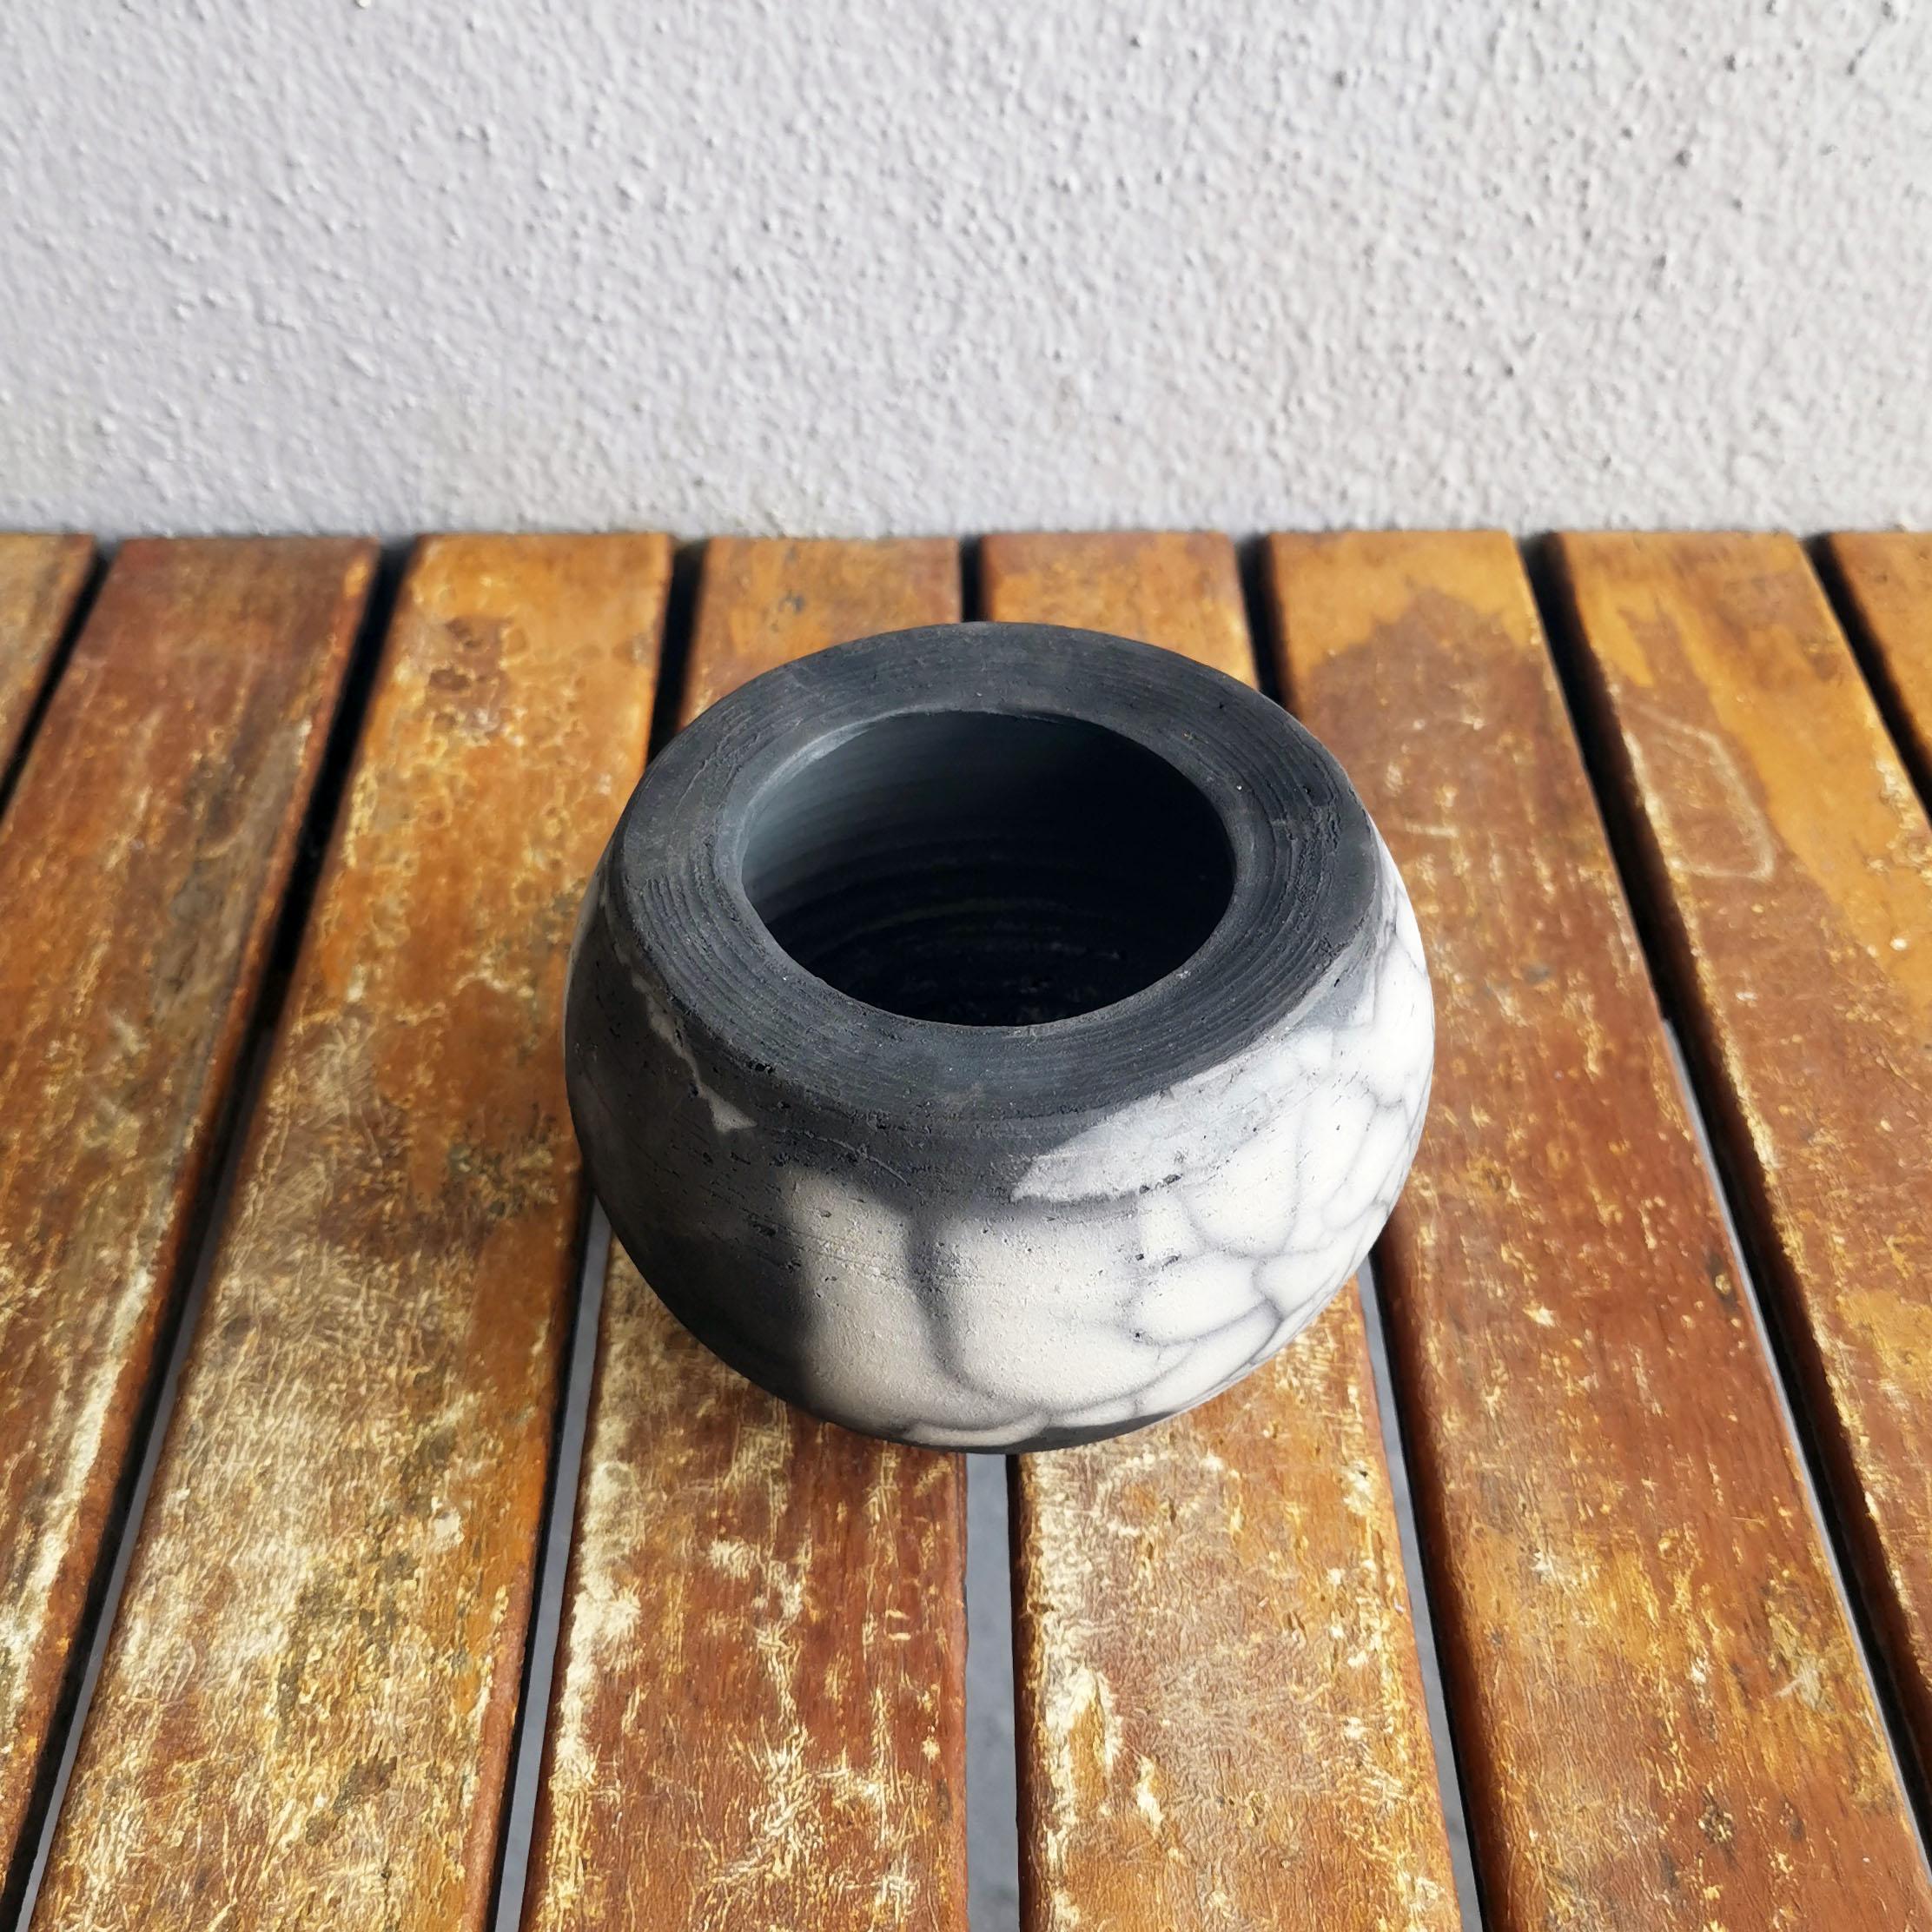 Malaysian Nikko Raku Pottery Vase, Smoked Raku, Handmade Ceramic Home Decor Gift For Sale